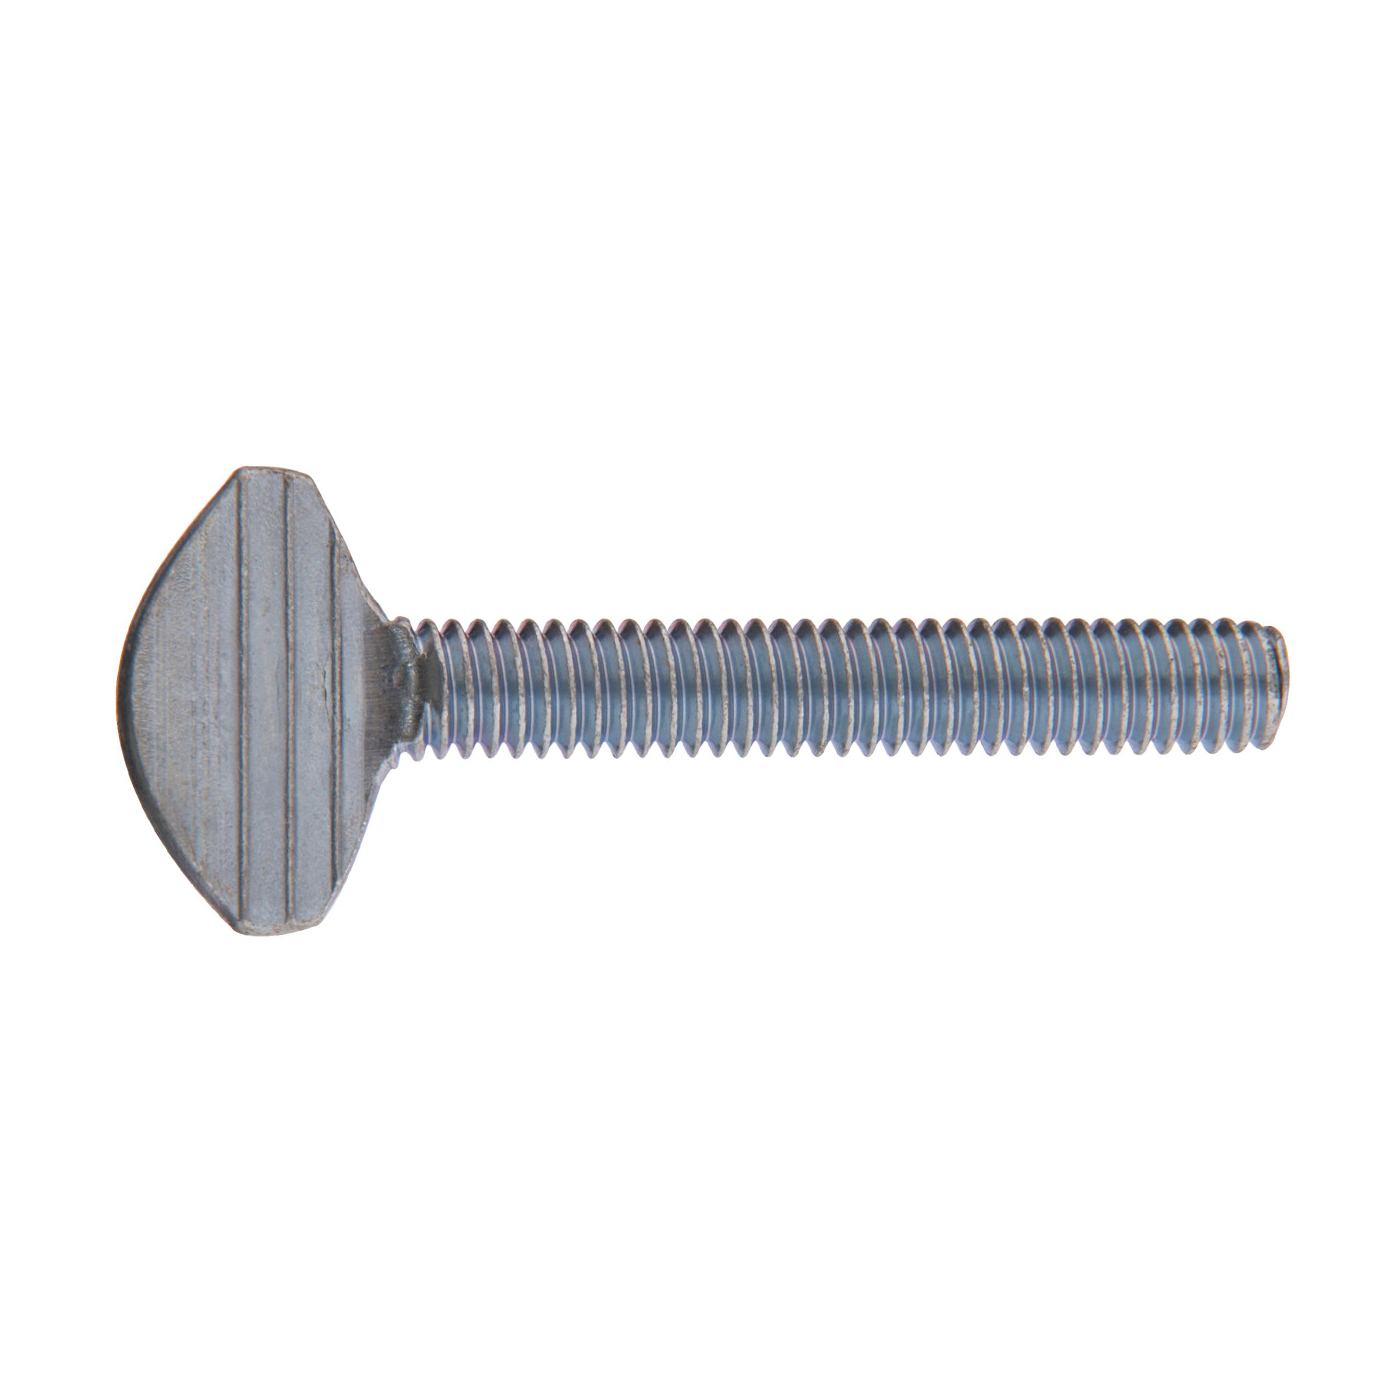 880946 Machine Screw, #10-24 Thread, 1 in L, Steel, Zinc-Plated